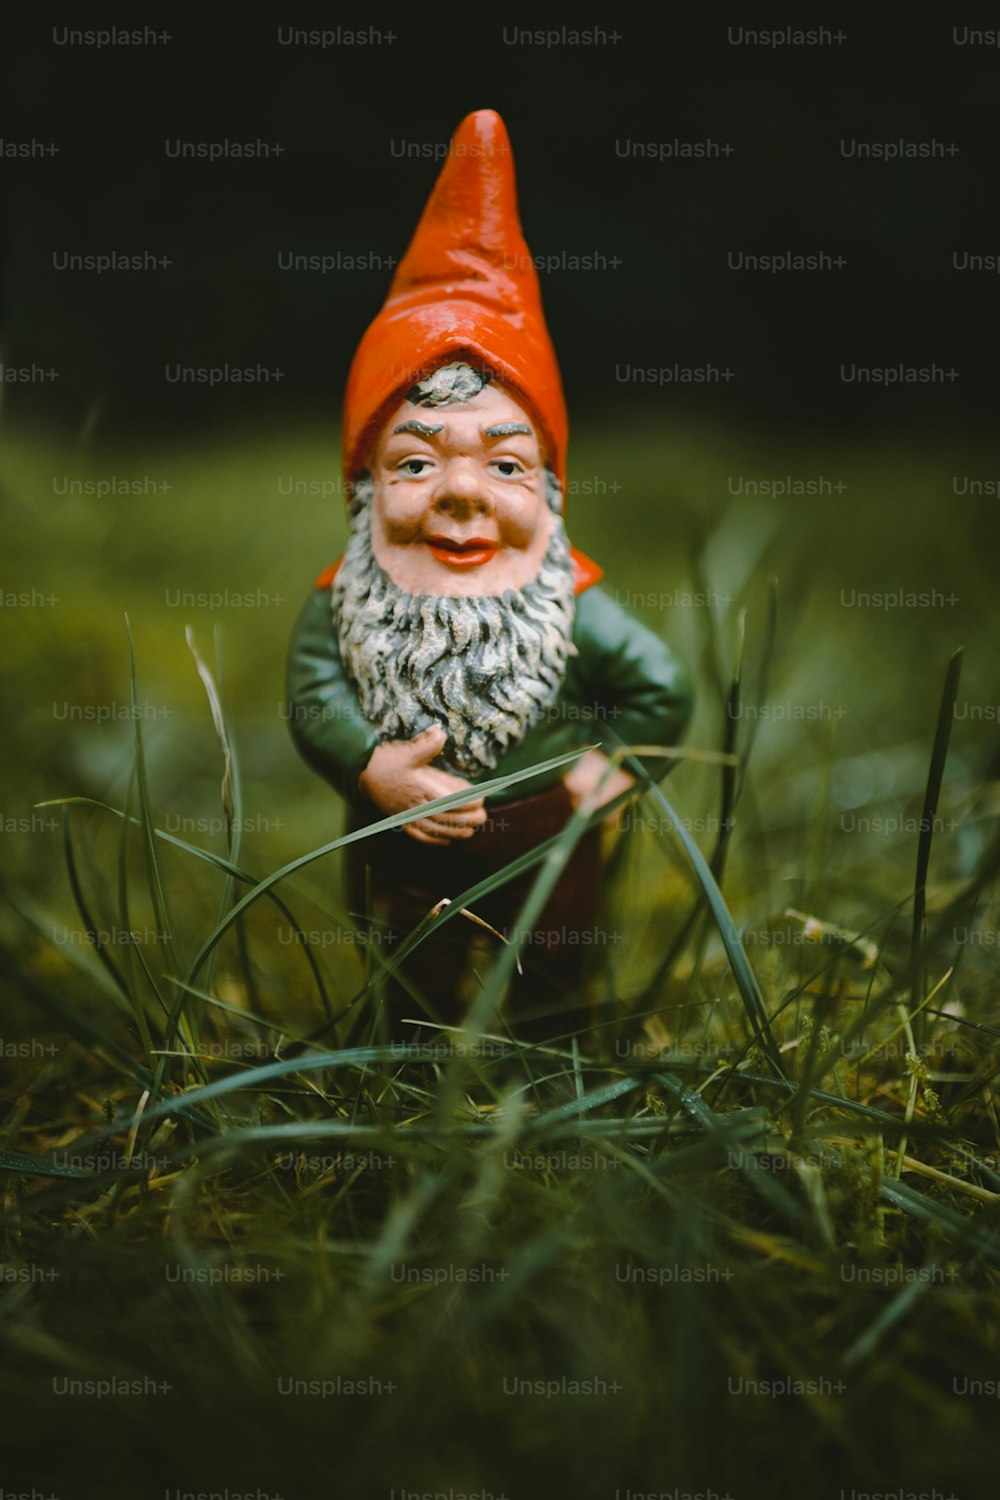 a gnome figurine sitting in the grass